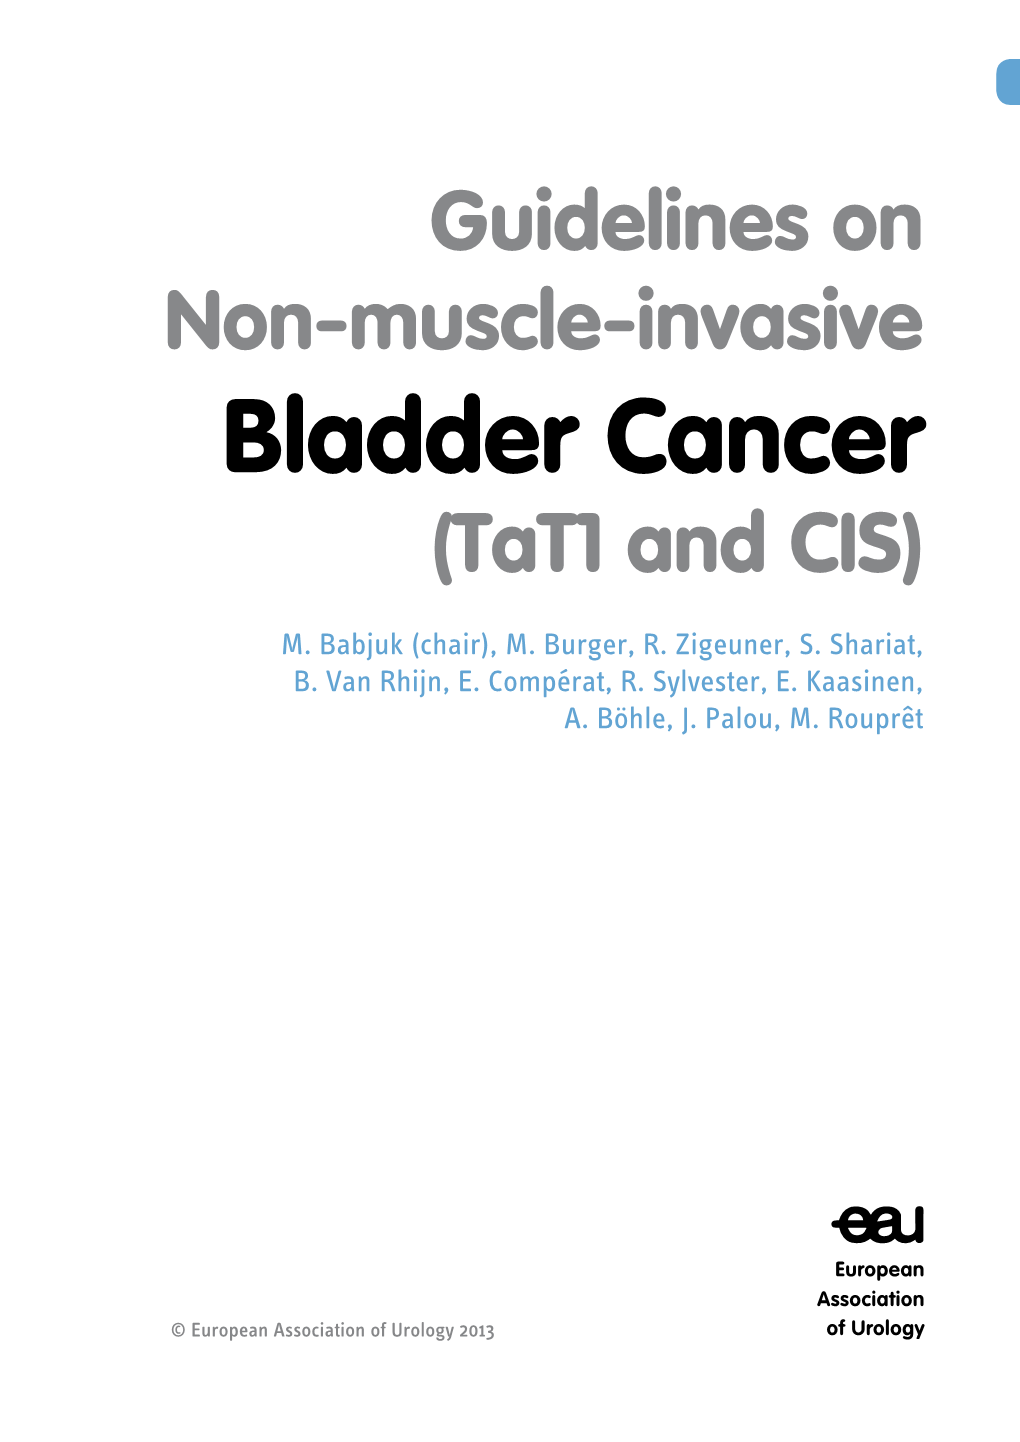 Bladder Cancer (Tat1 and CIS)